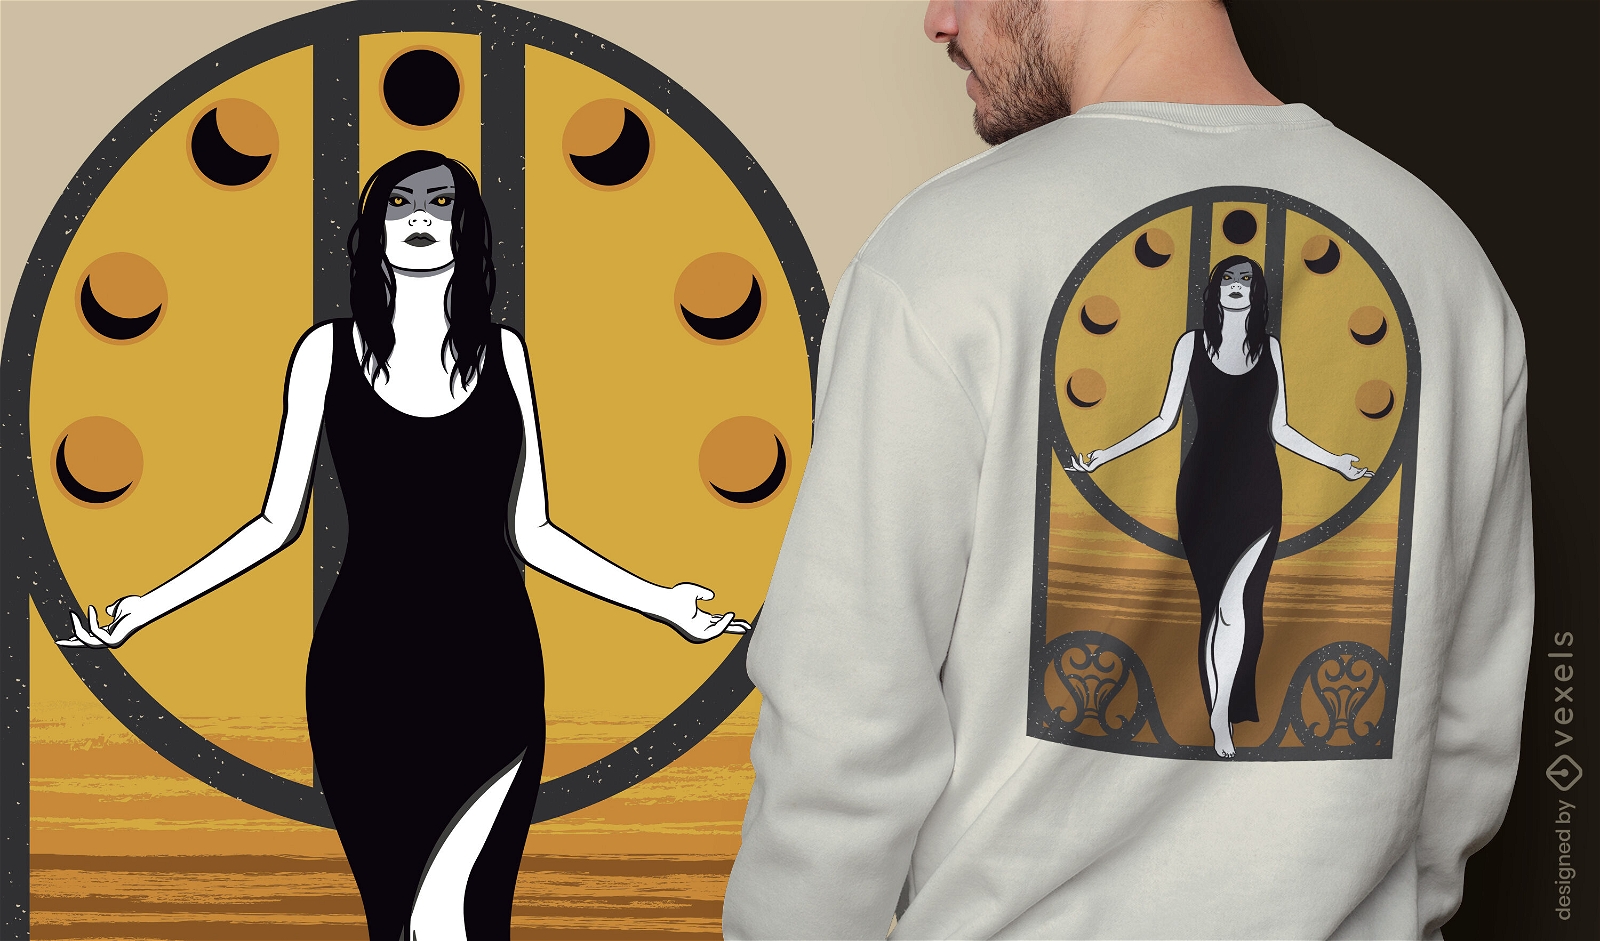 Design incrível de camiseta para feiticeira da lua